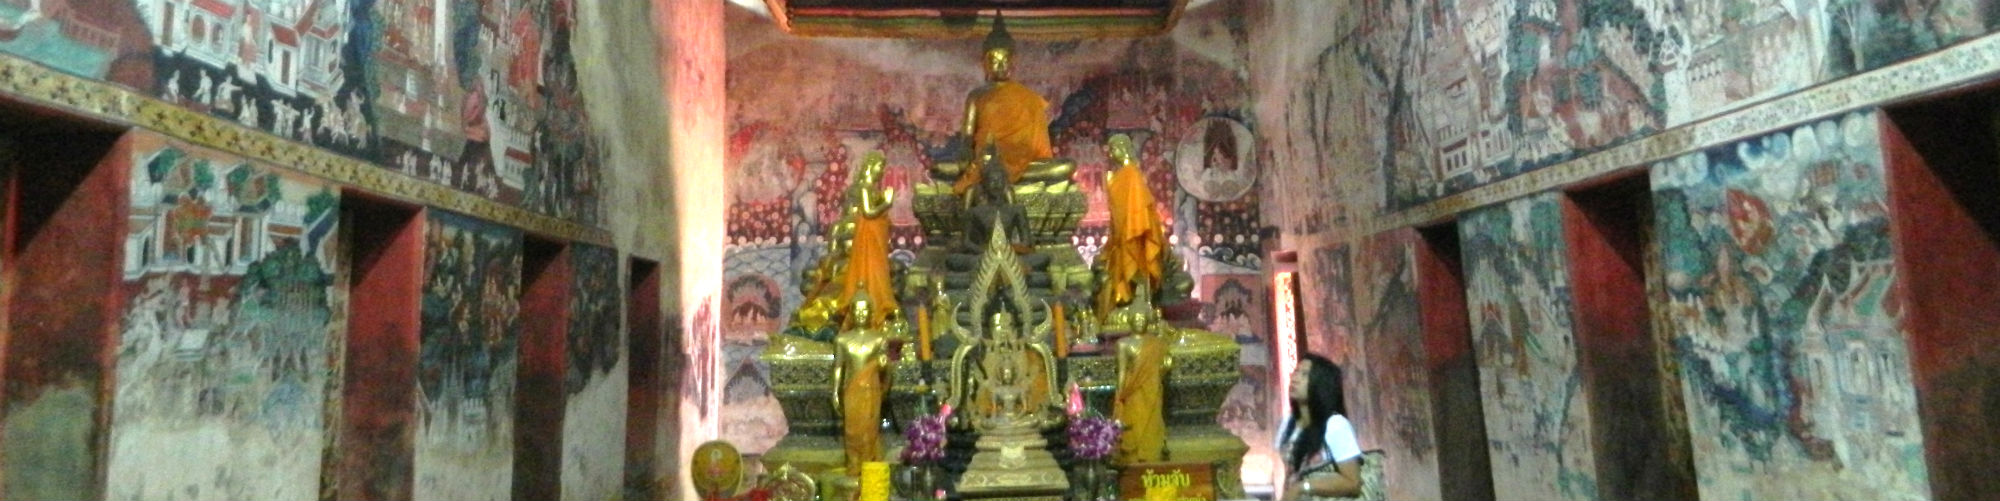 Wat Khongkharam, Potharam, Ratchburi Province